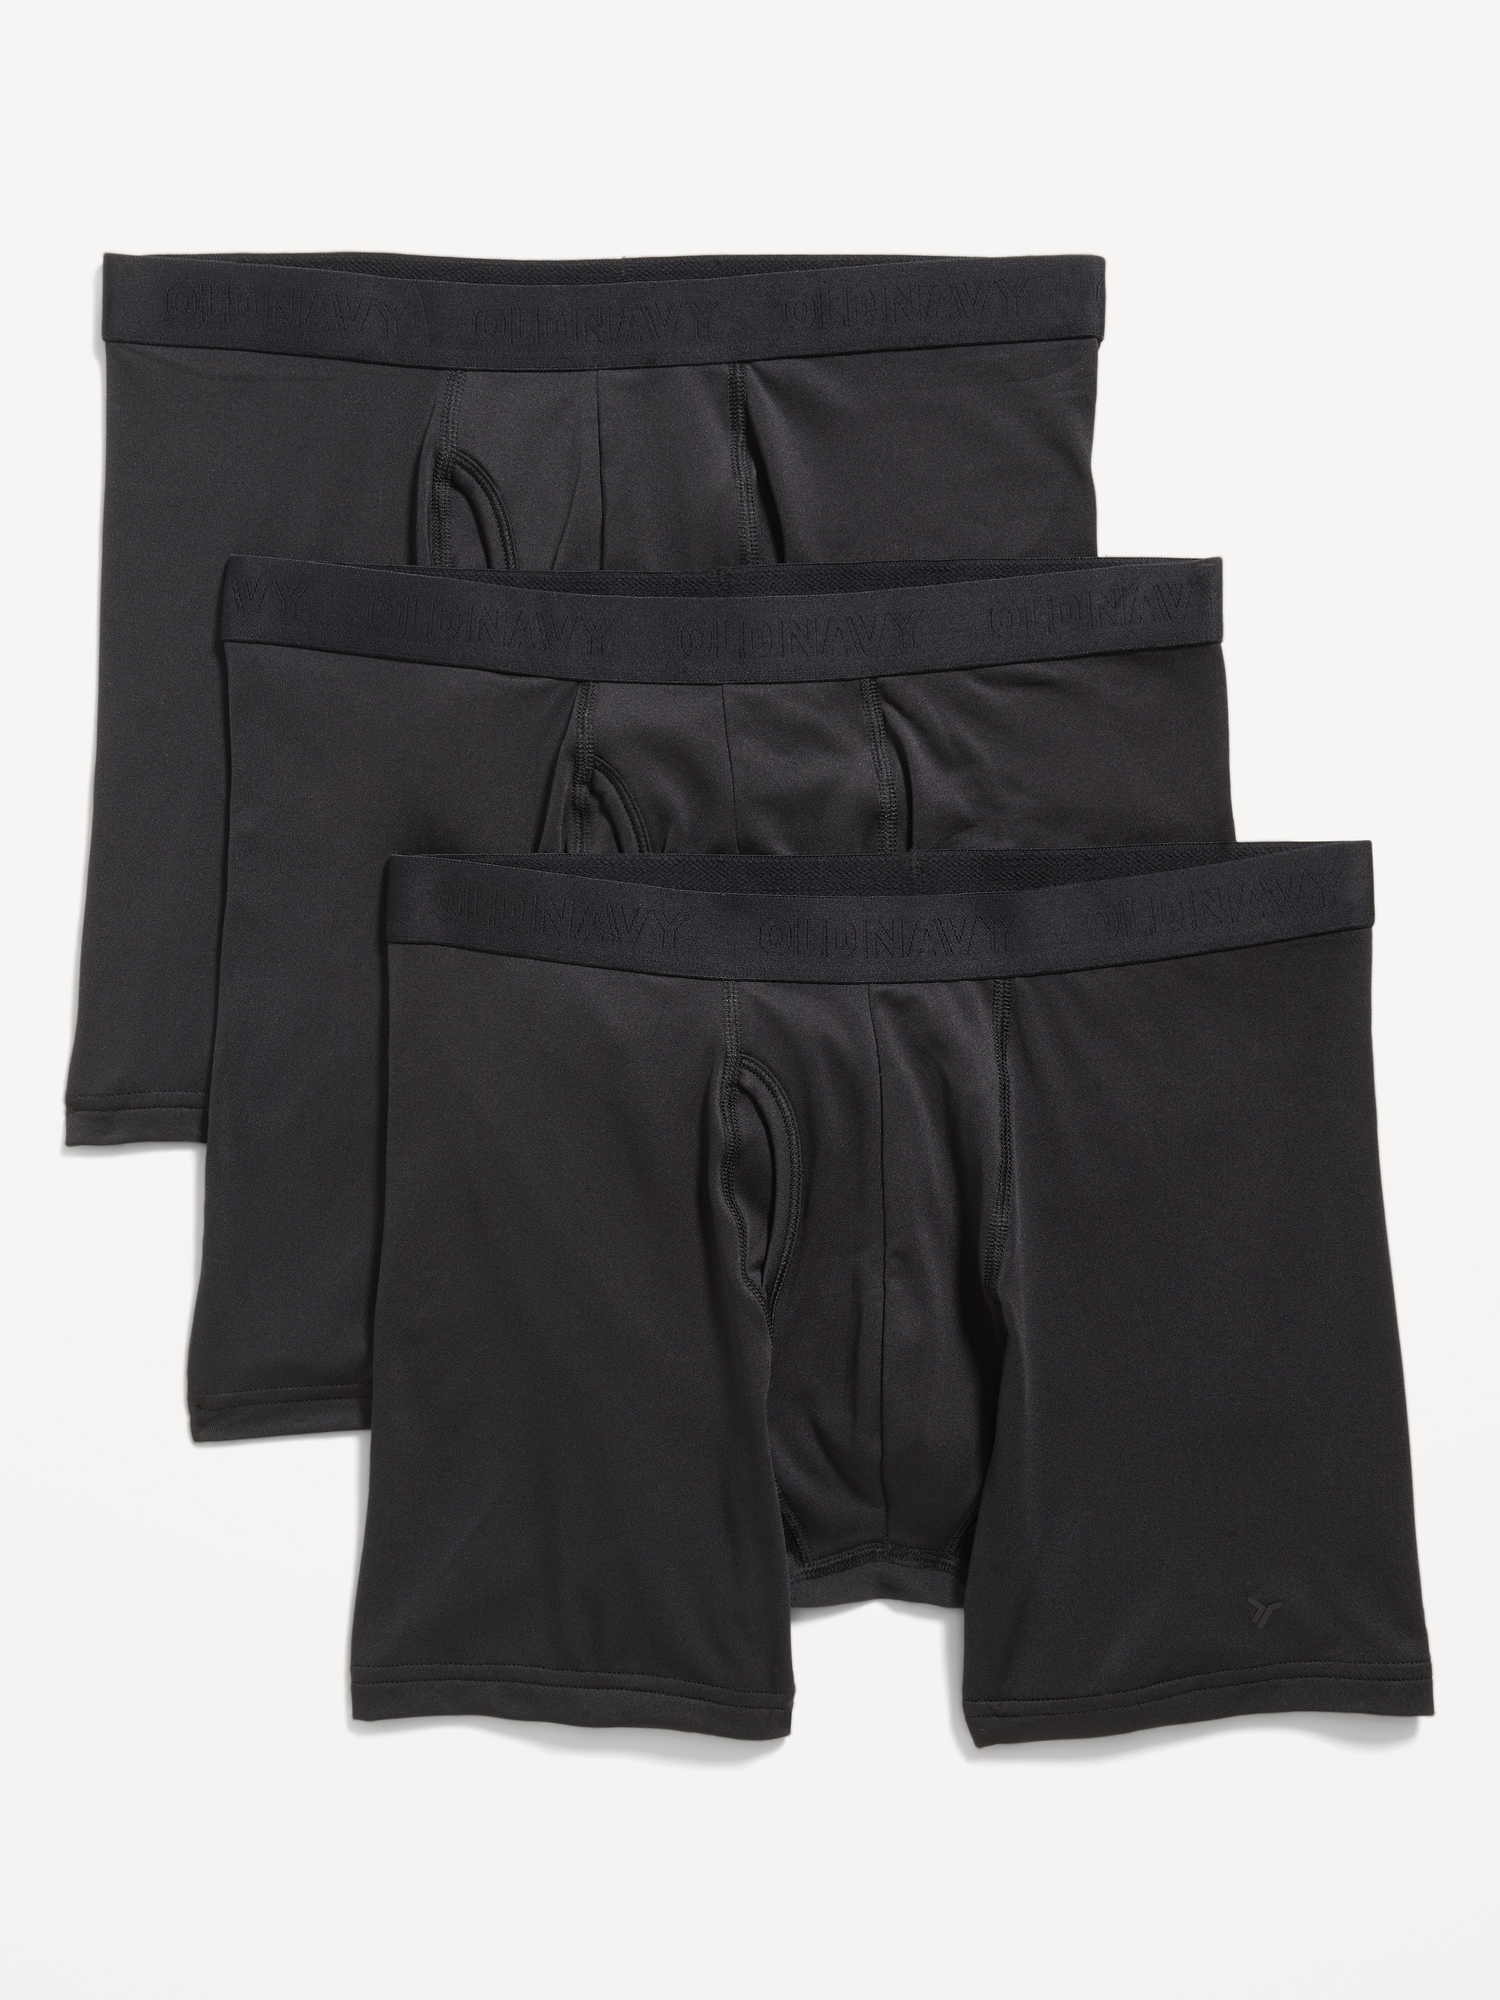 Men's Underwear Multipacks